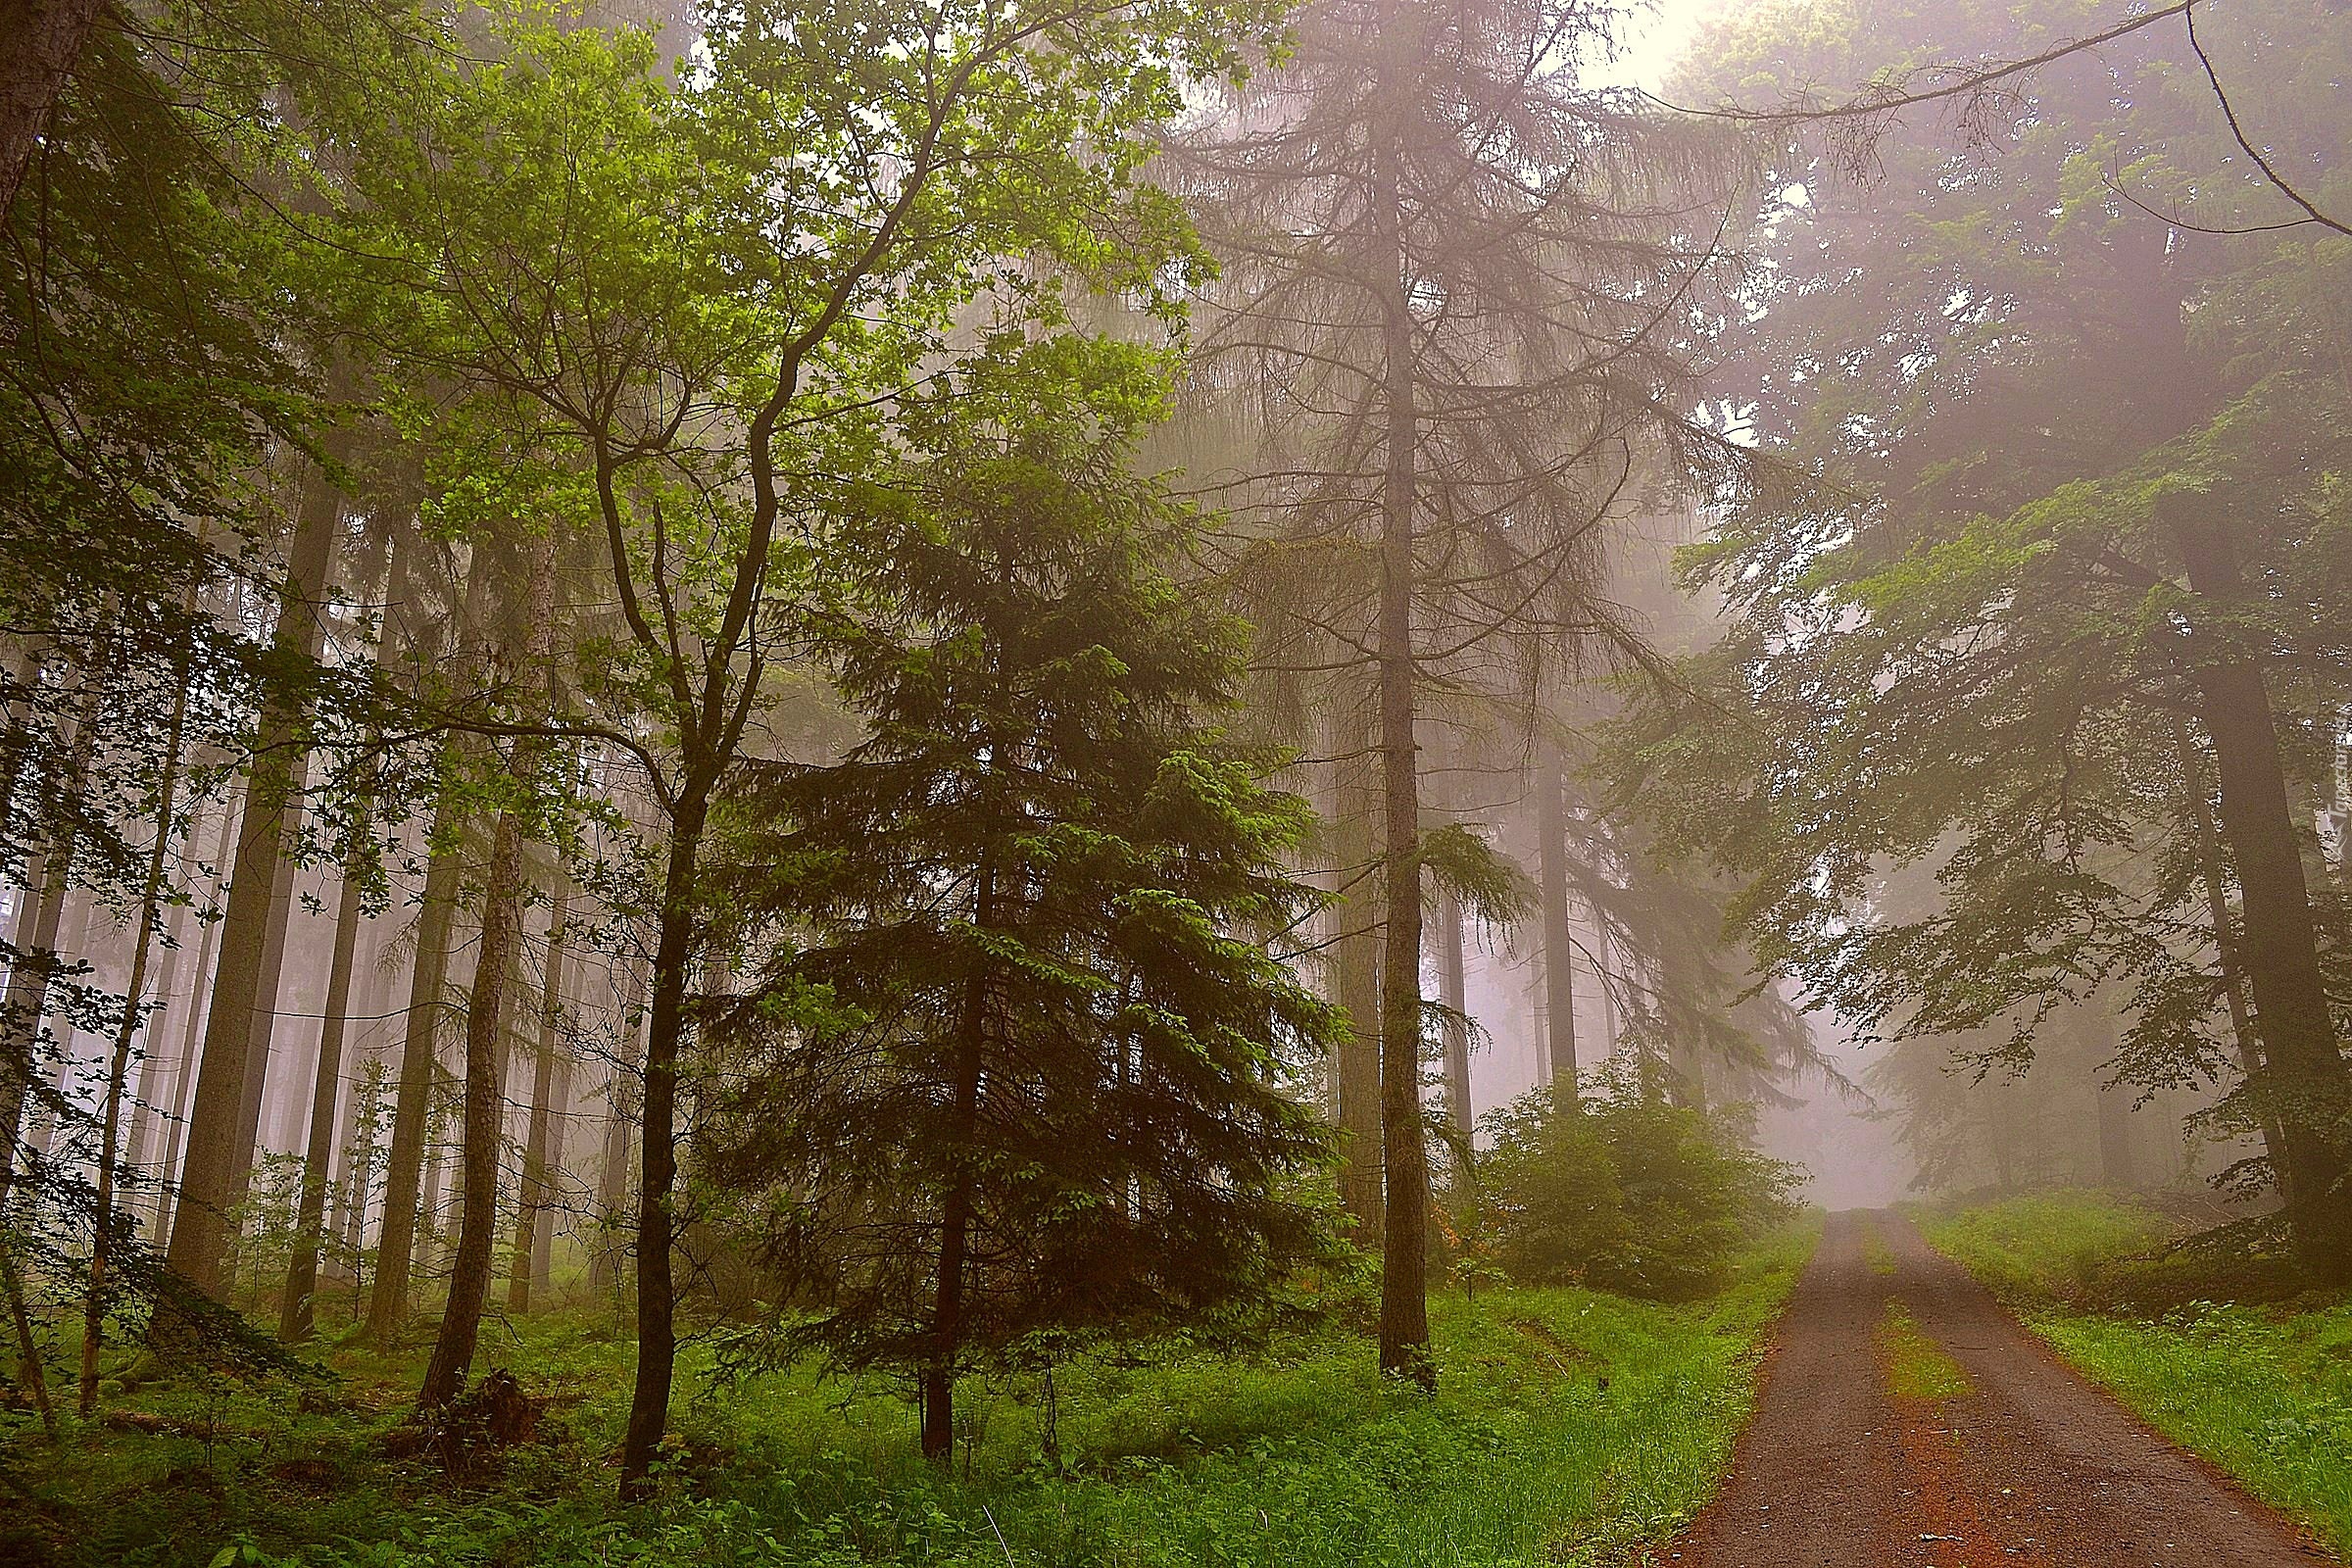 Las, Droga, Mgła